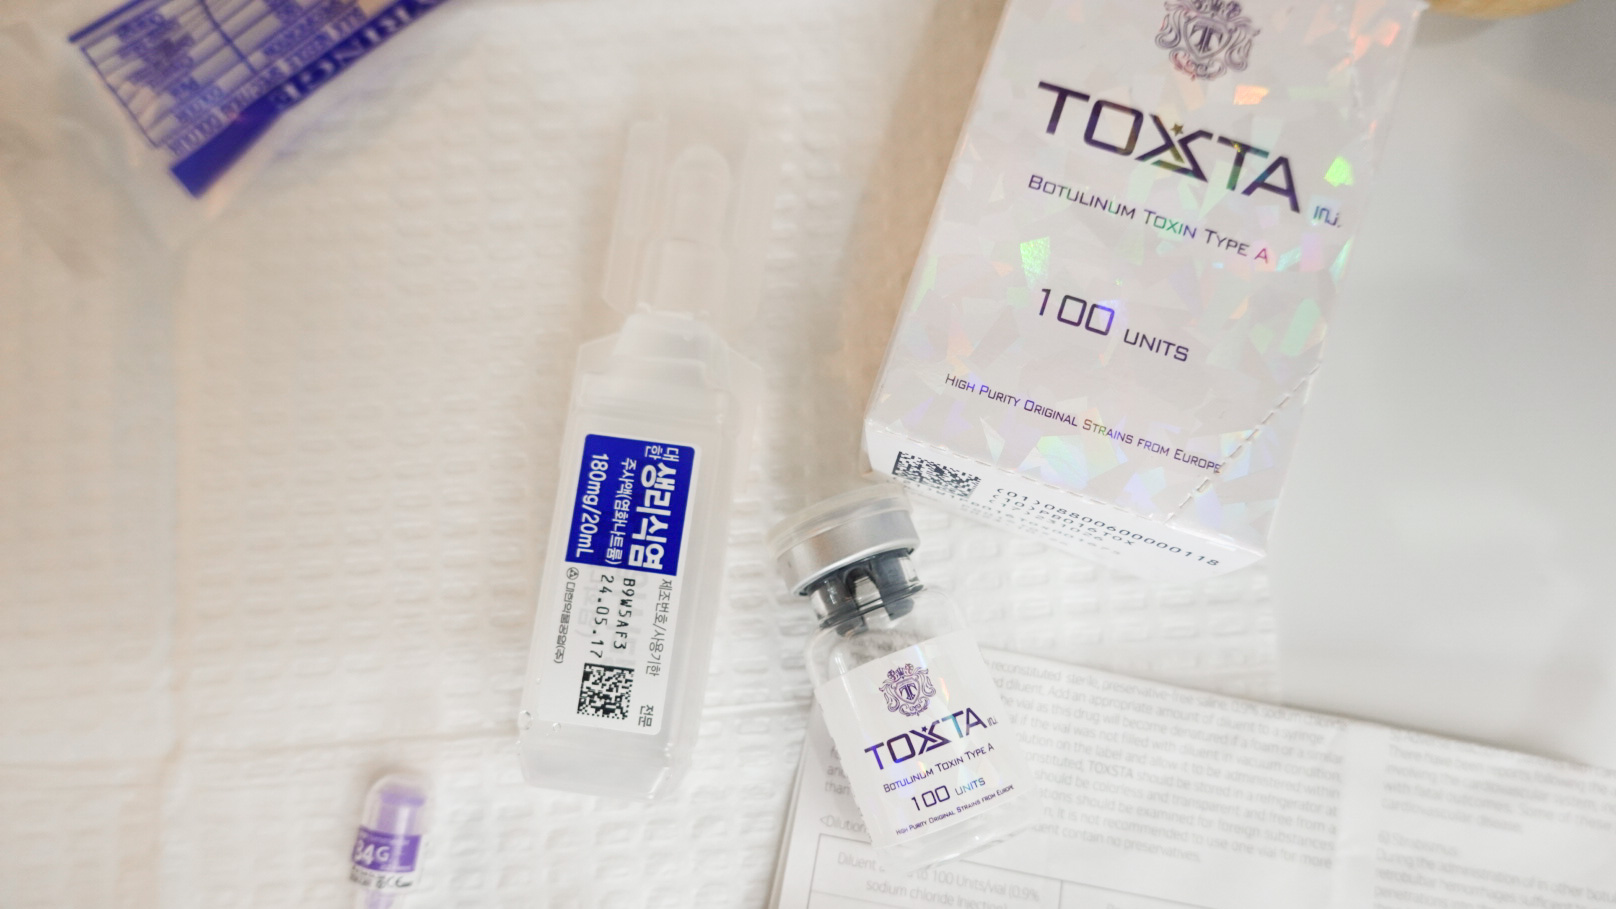 TOXTA Botulinum toxin INJECTIONS